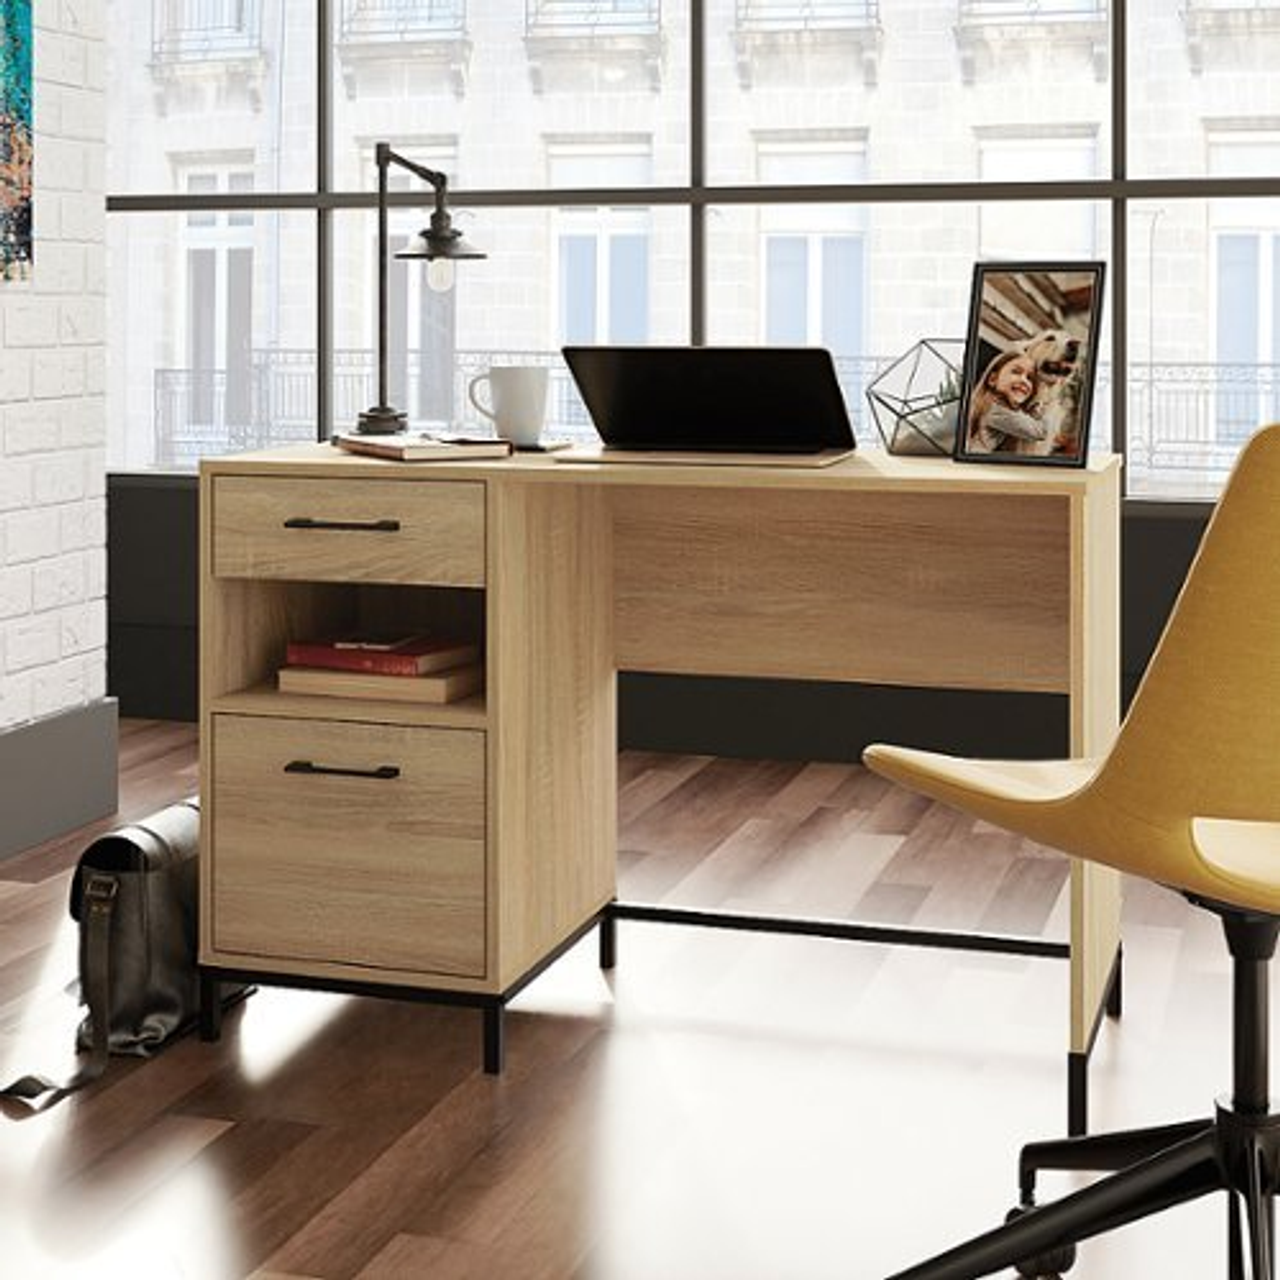 Sauder - North Avenue Home Office Desk - Charter Oak